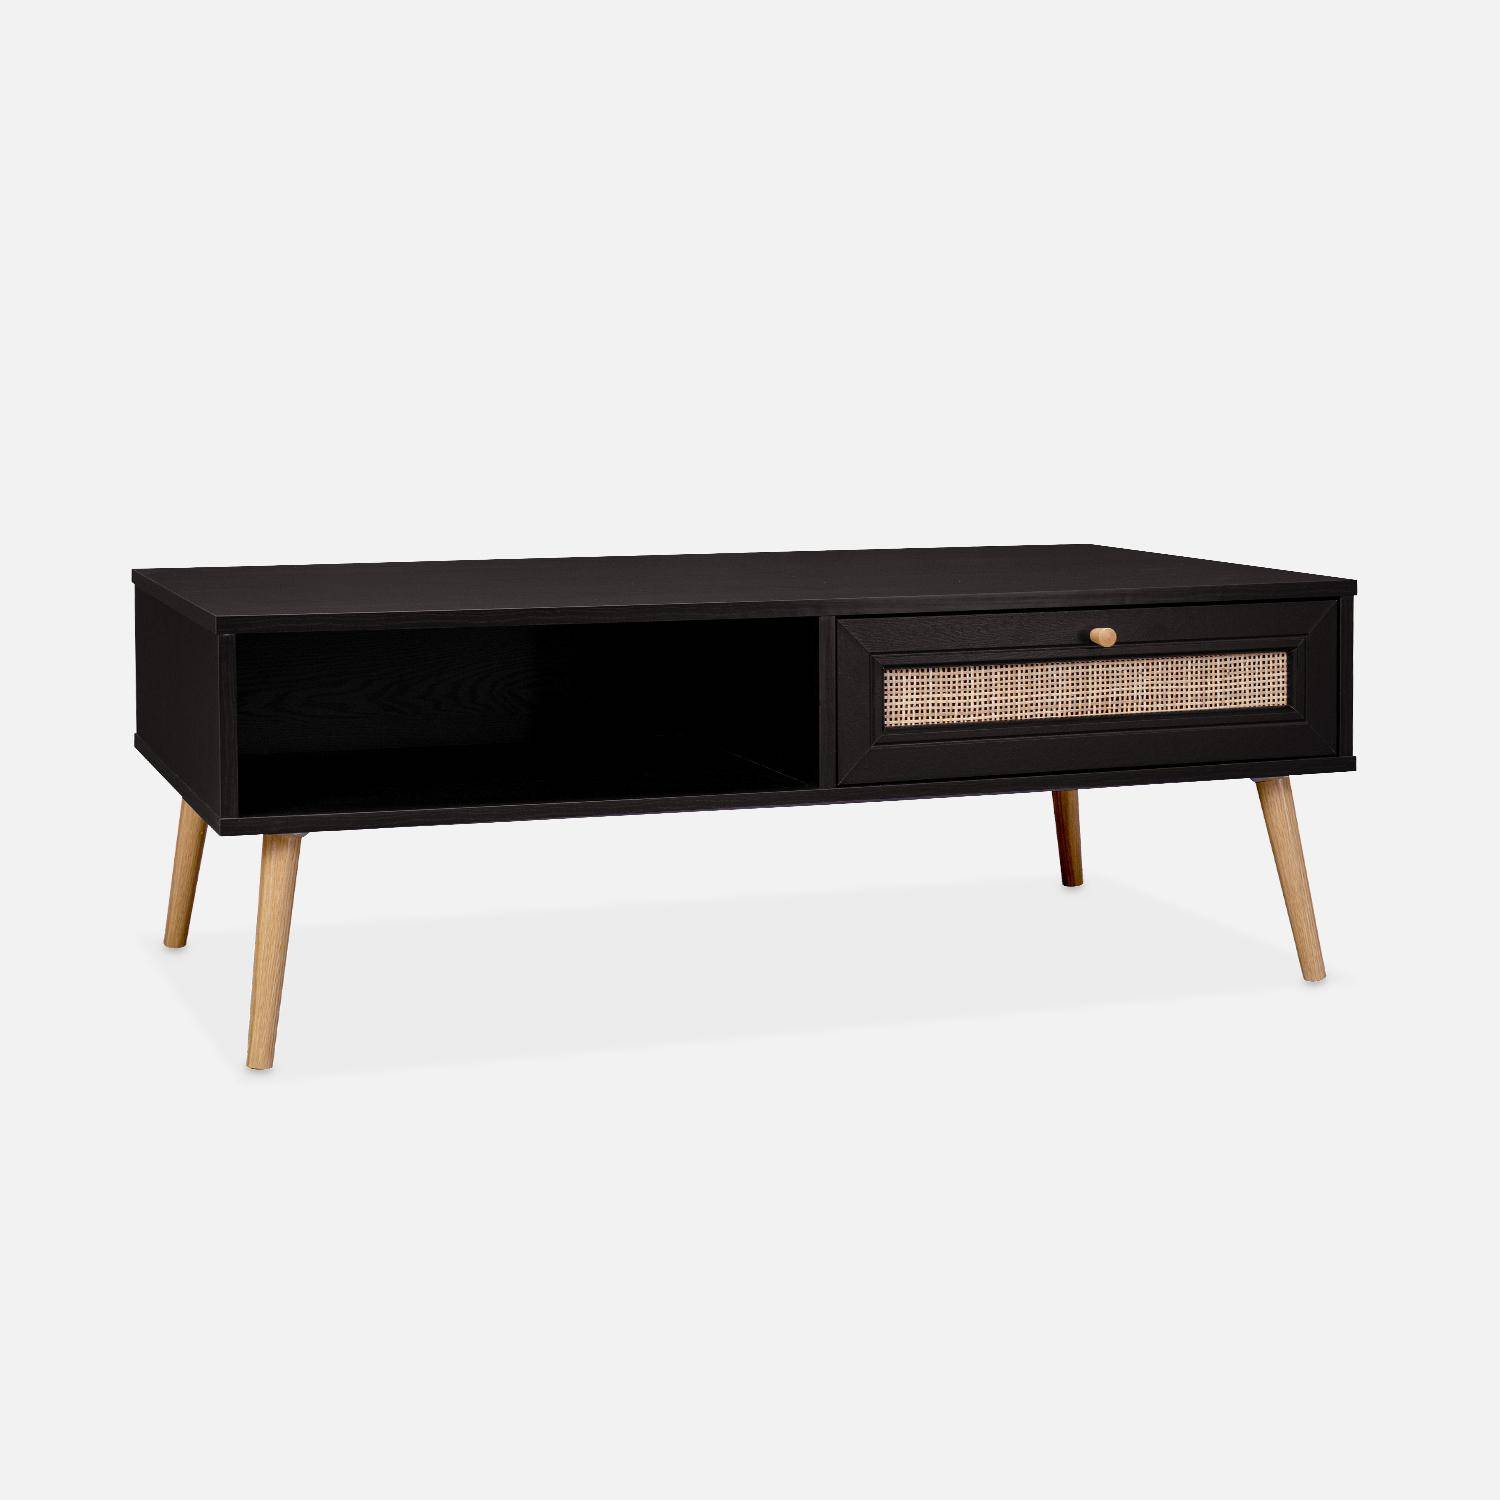  Wood and woven rattan coffee table with storage, 110x59x39cm, black, Boheme Photo2